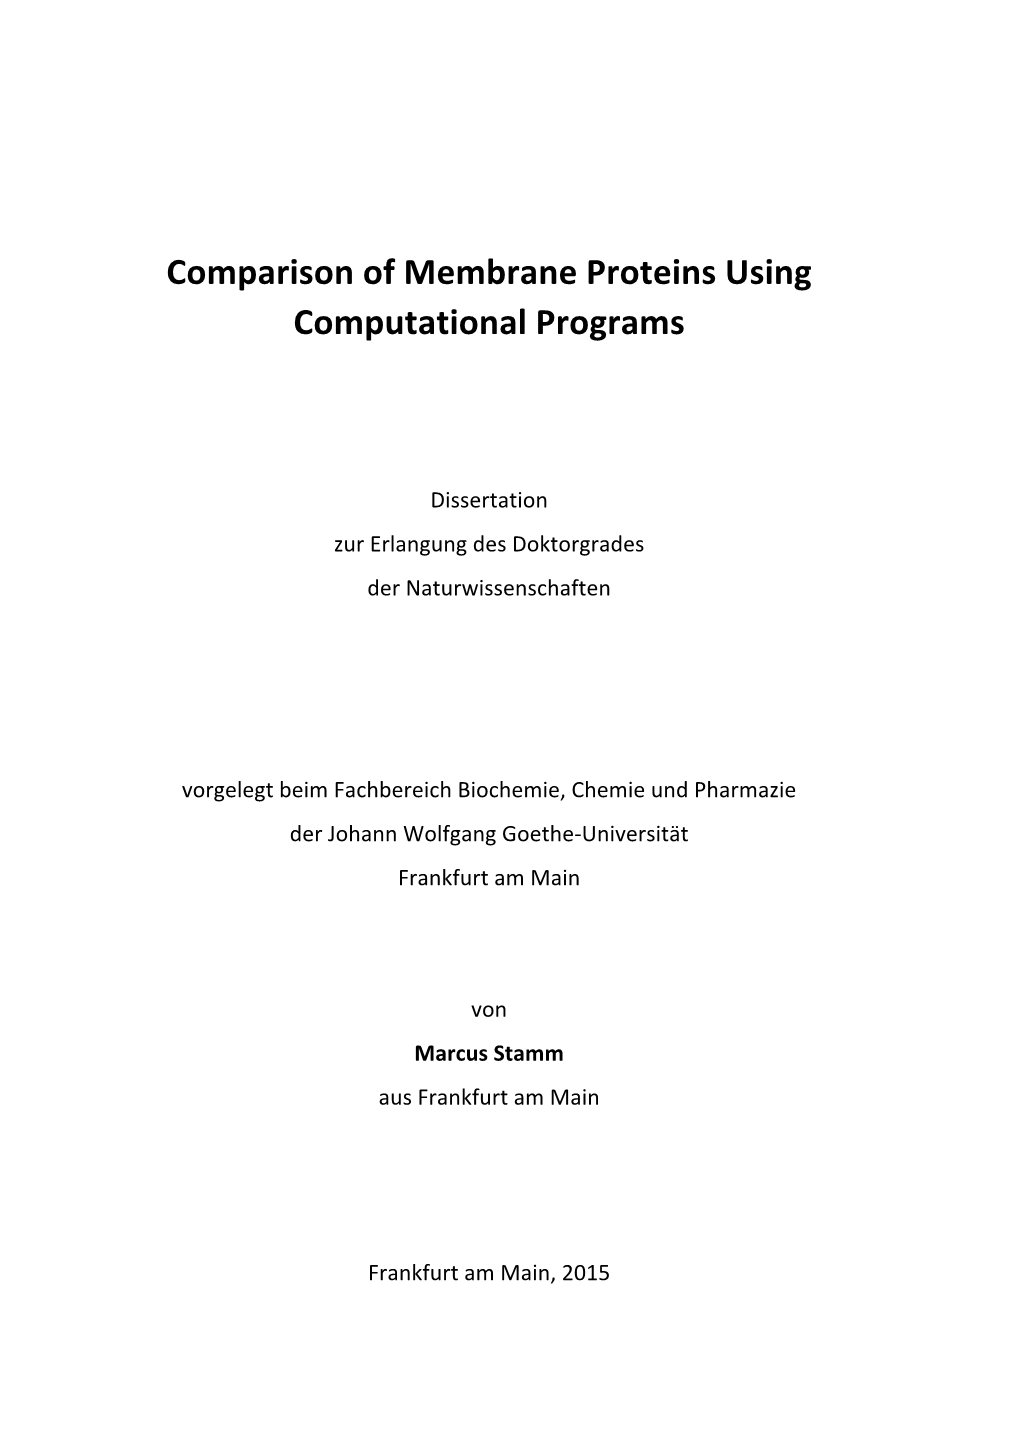 Comparison of Membrane Proteins Using Computational Programs